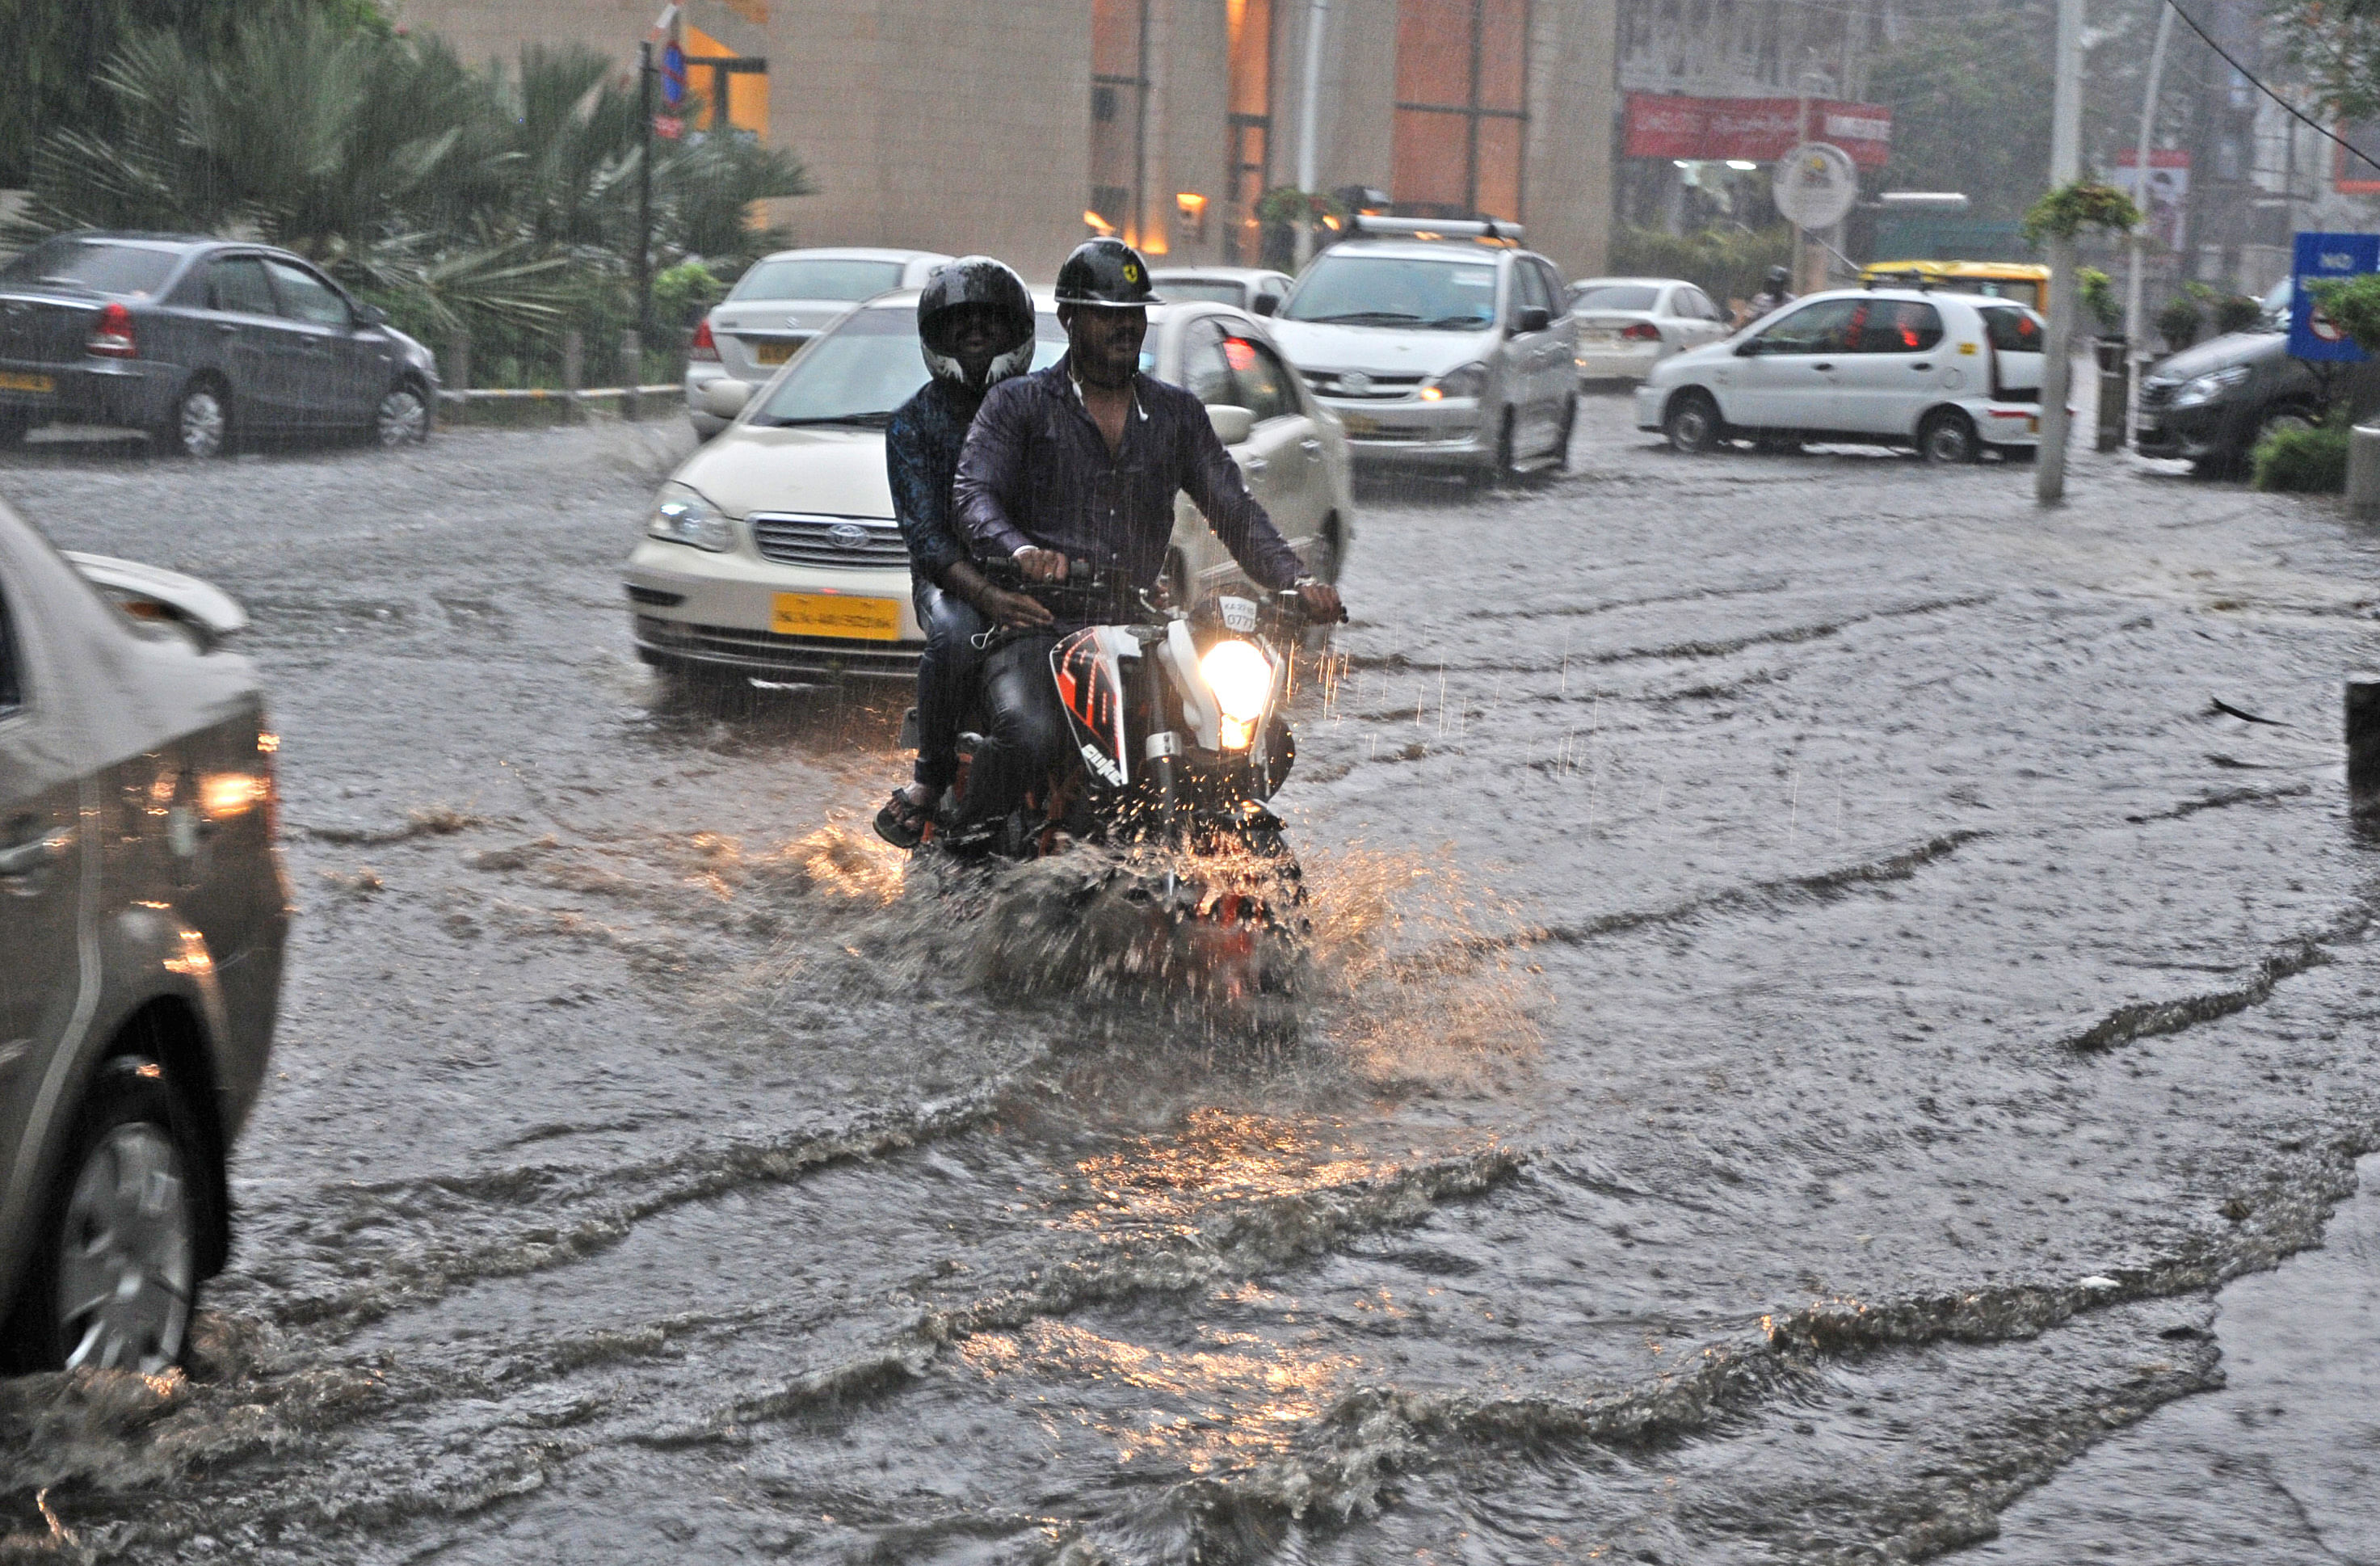 Overnight heavy rain has caused flooding across Bengaluru city on Friday morning, according to TV reports. File photo.